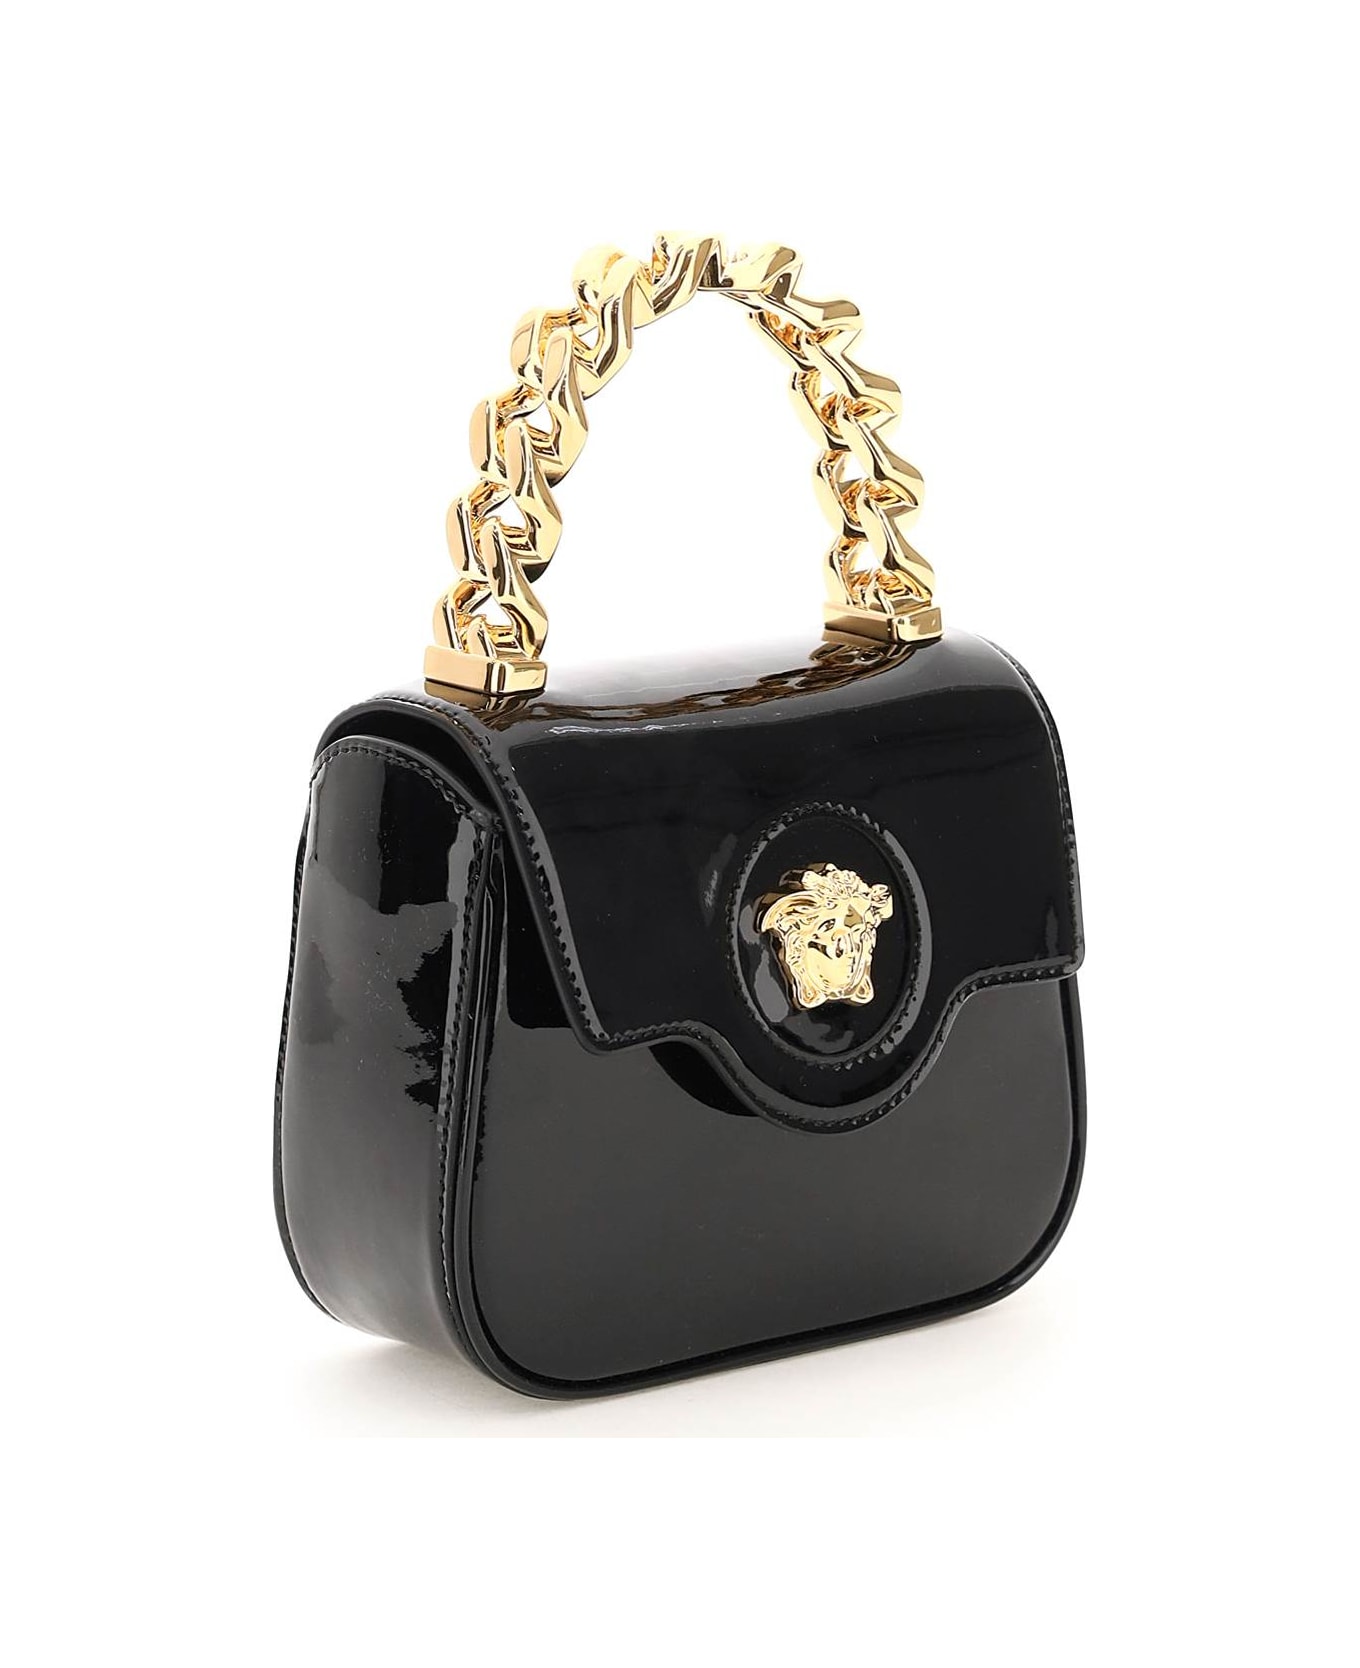 Versace 'la Medusa' Mini Bag In Patent Leather - Black+gold Versace トートバッグ